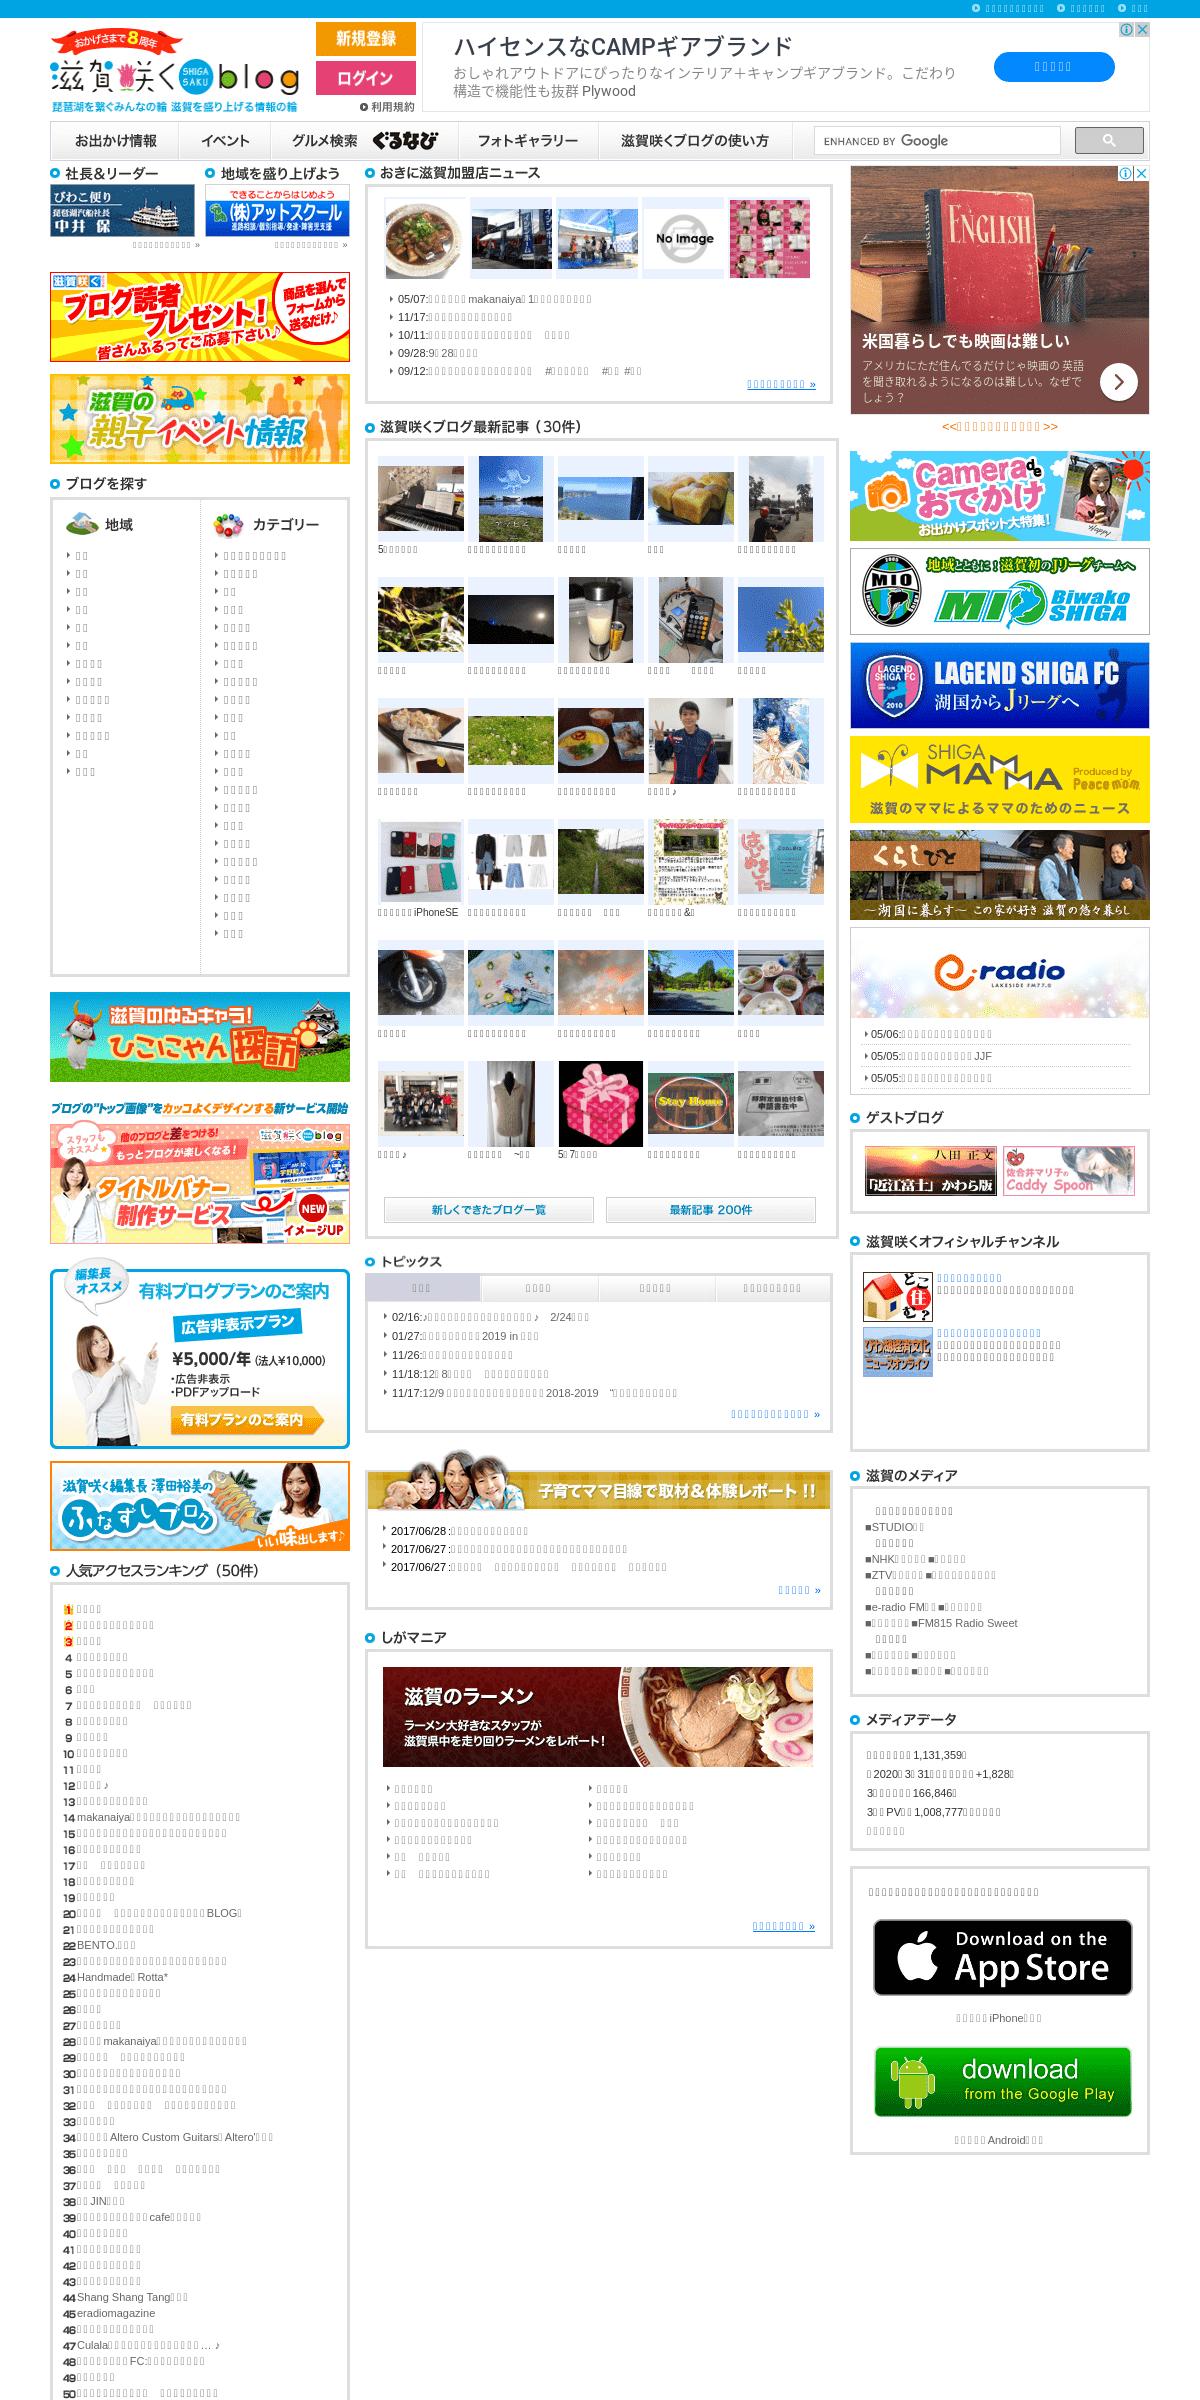 A complete backup of shiga-saku.net